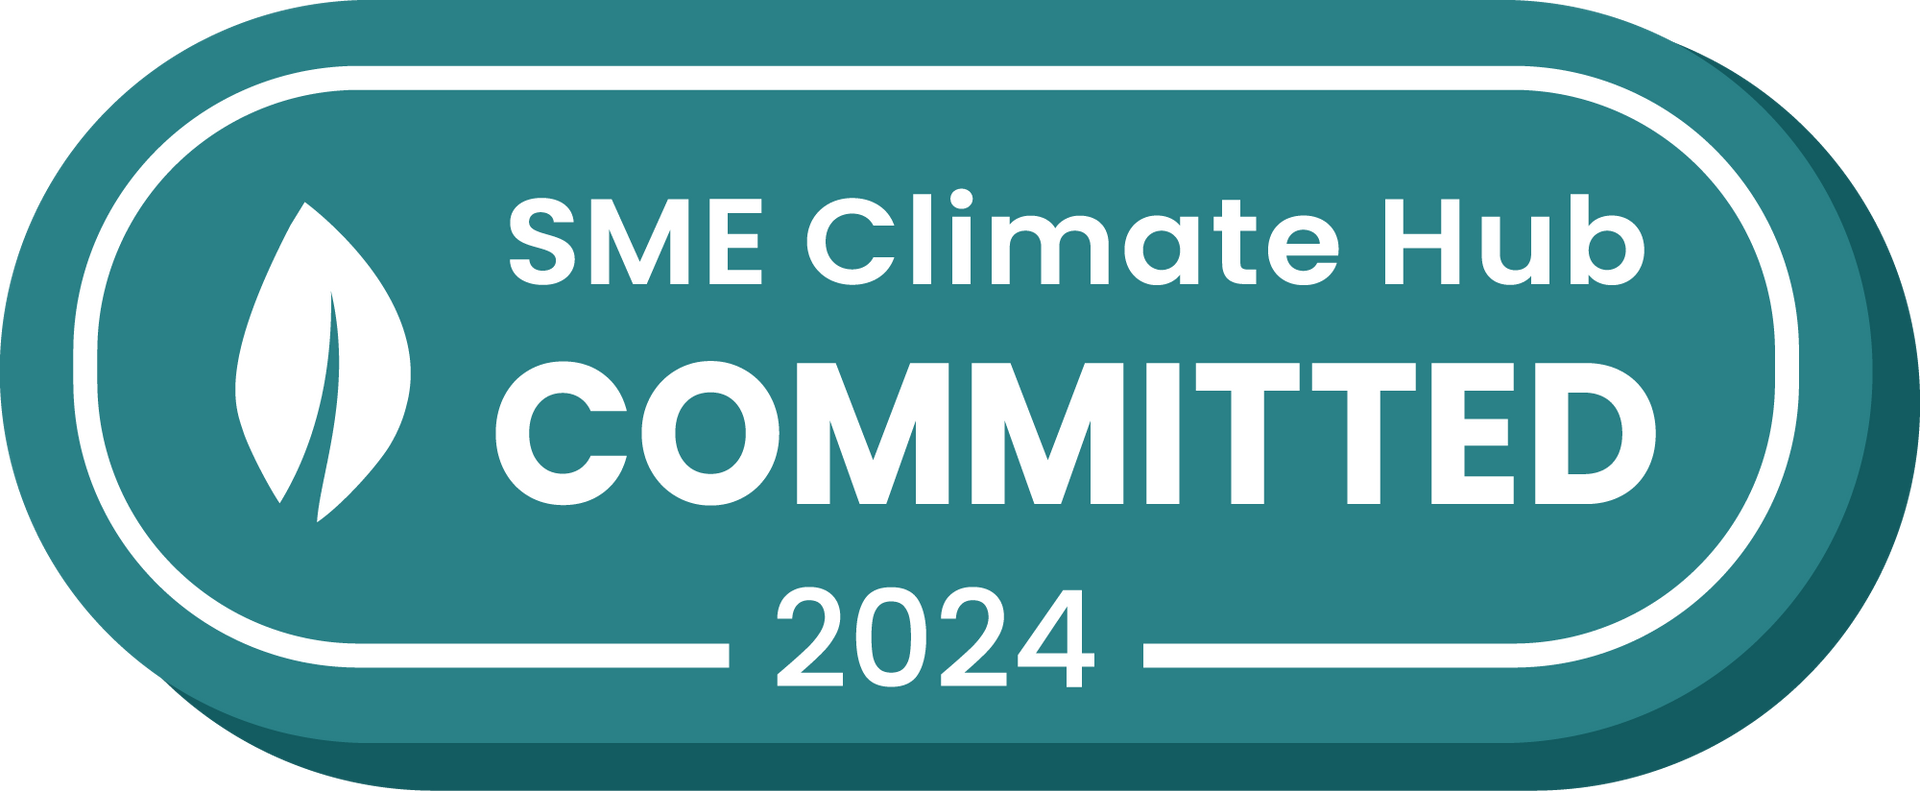 SME Climate Hub Logo 2023